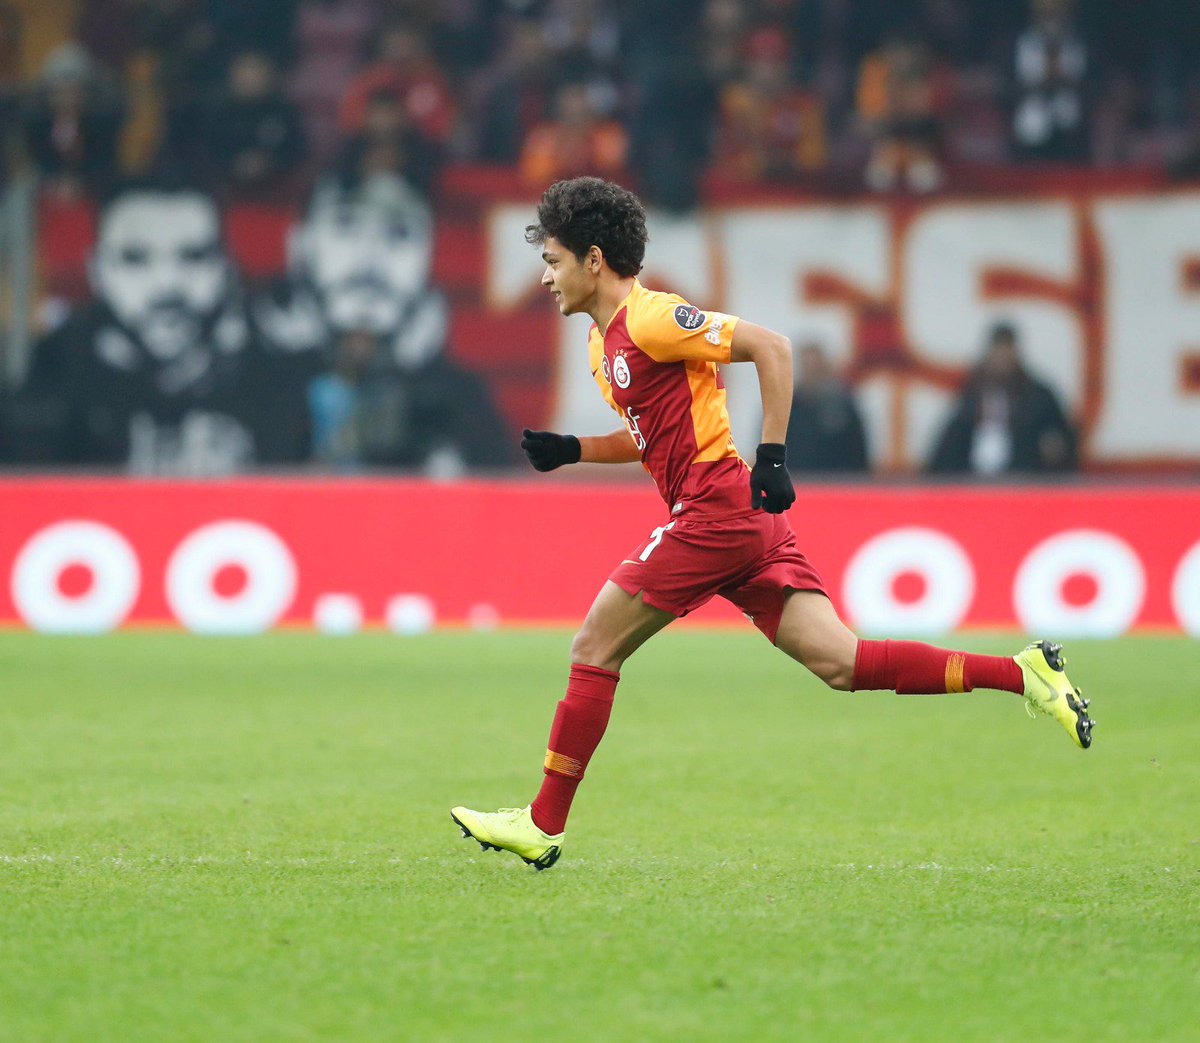 GalatasaraySK tweet picture